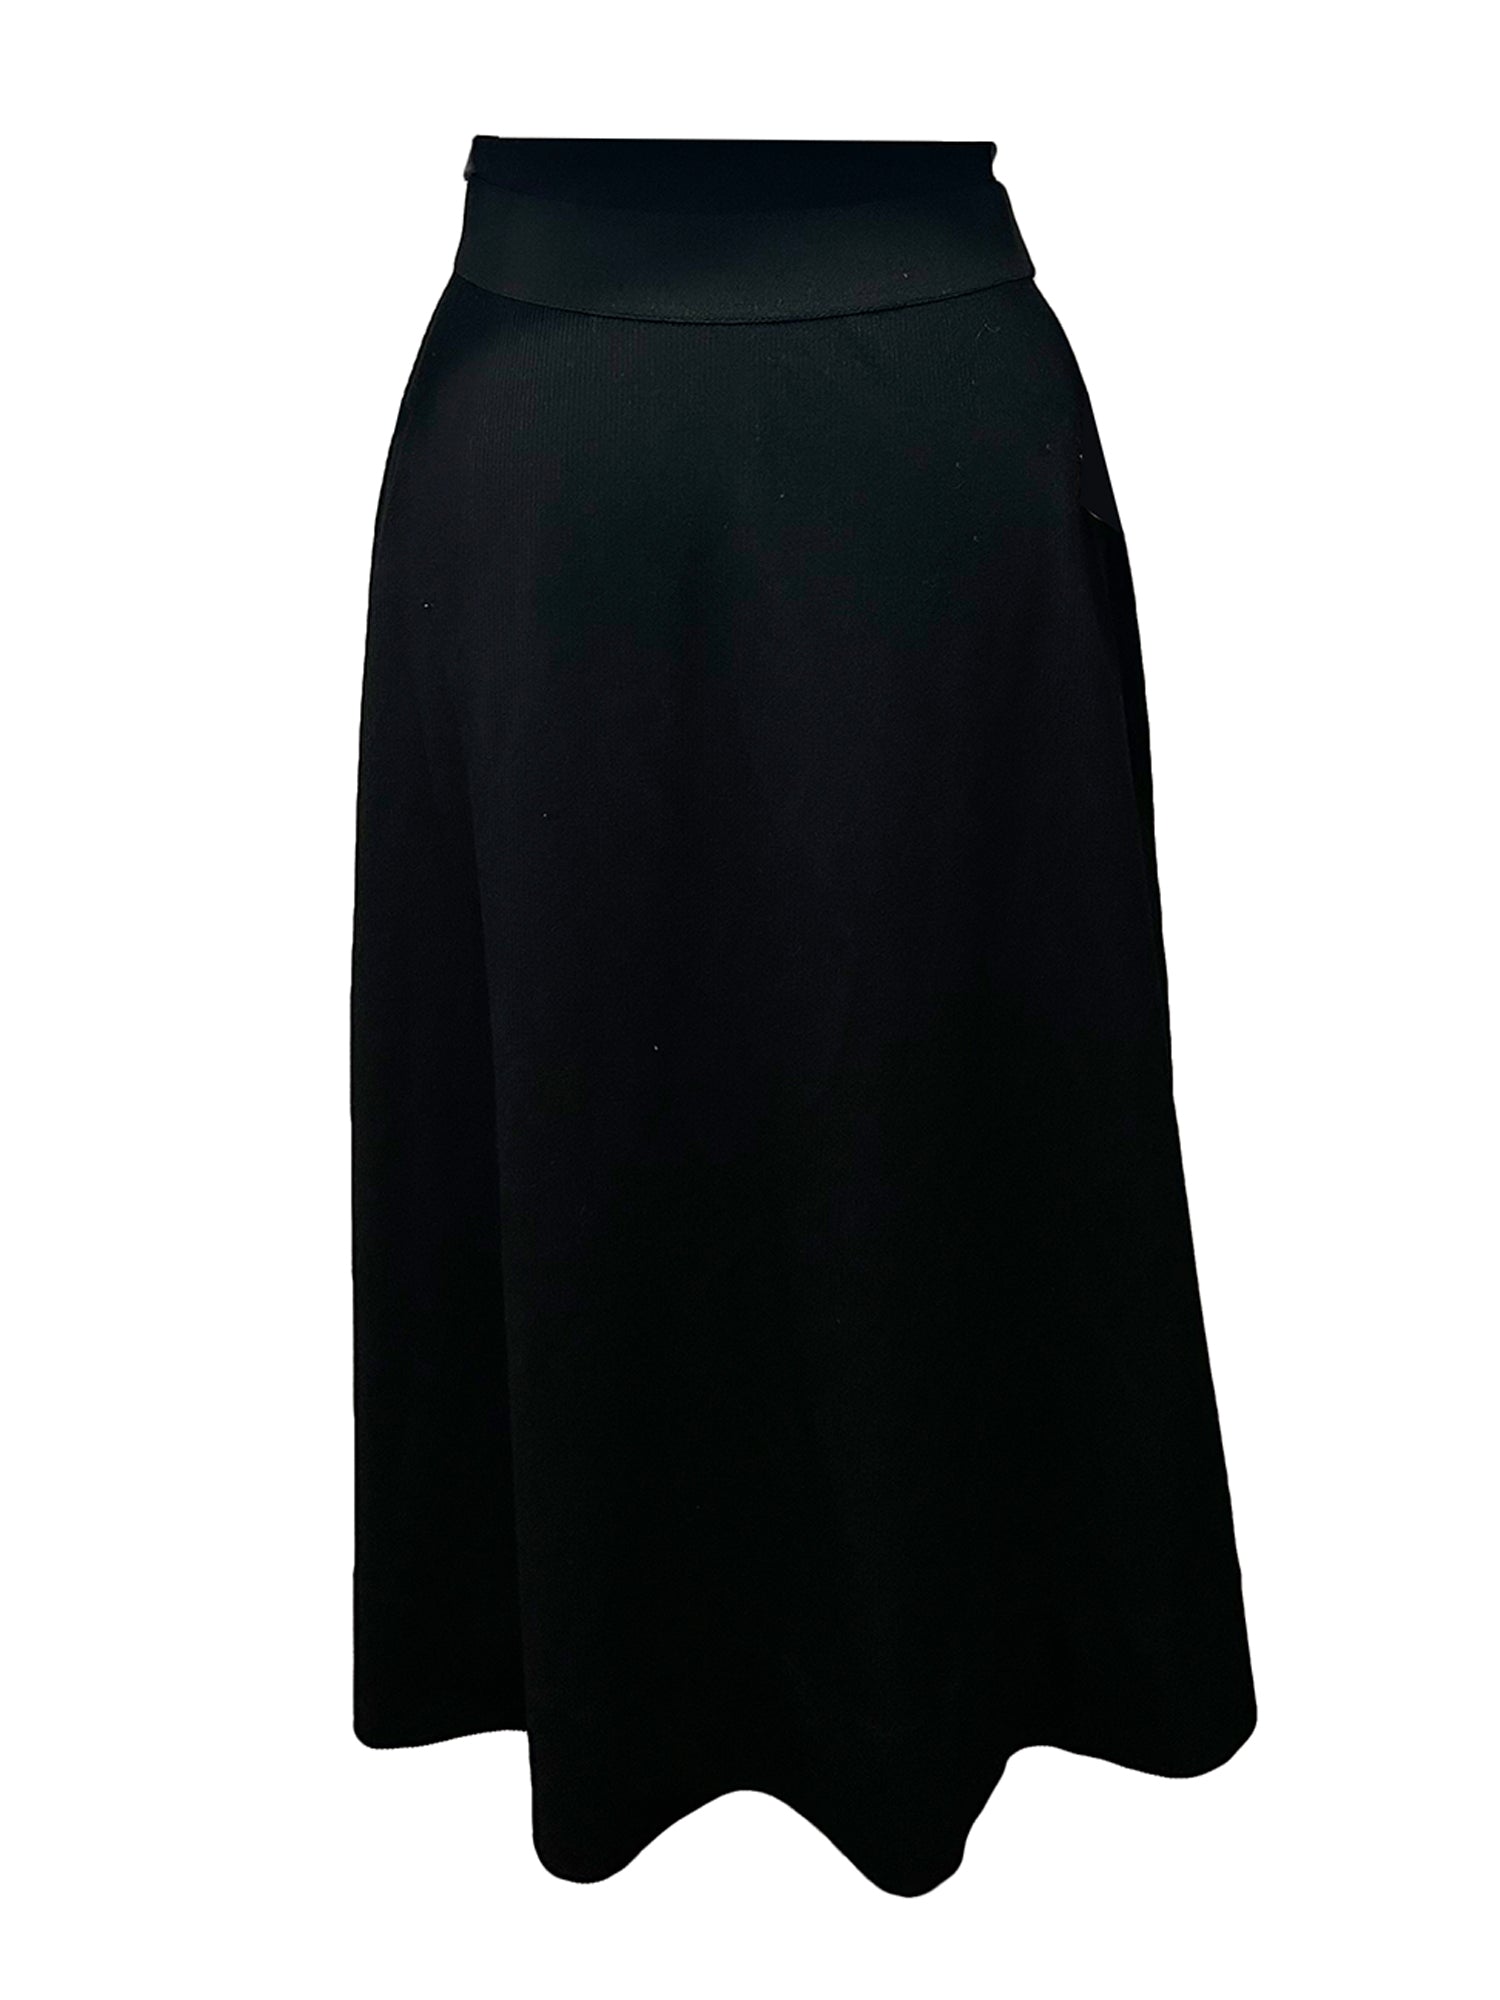 Wear & Flair A-line Skirt (SWF-19) - Skirts